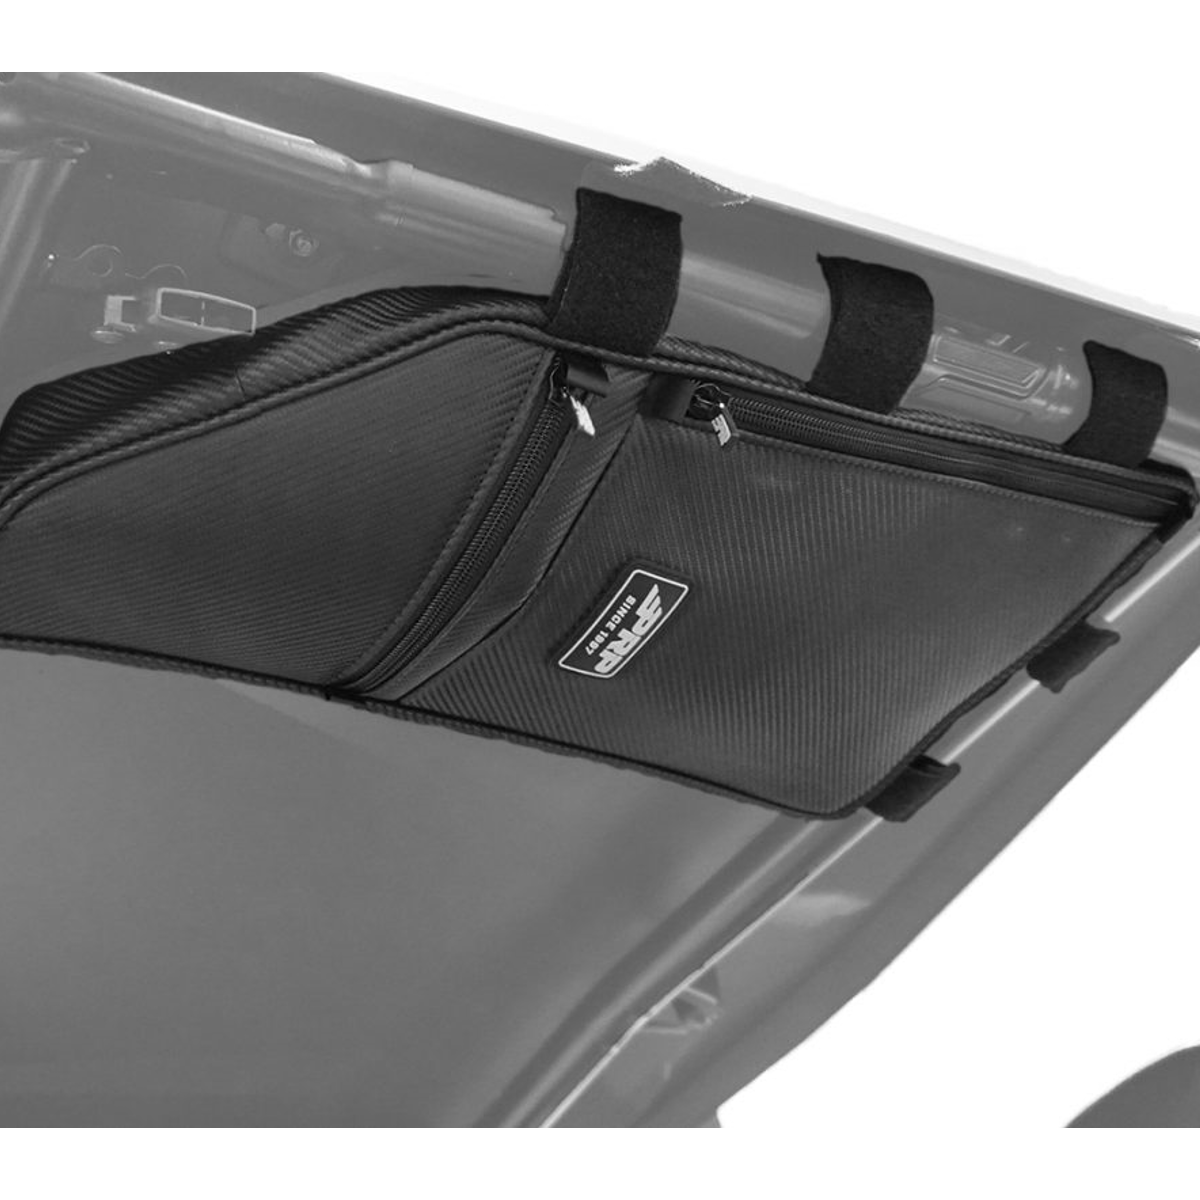 Honda Talon Overhead Bags and Trunk Bag - BUNDLE